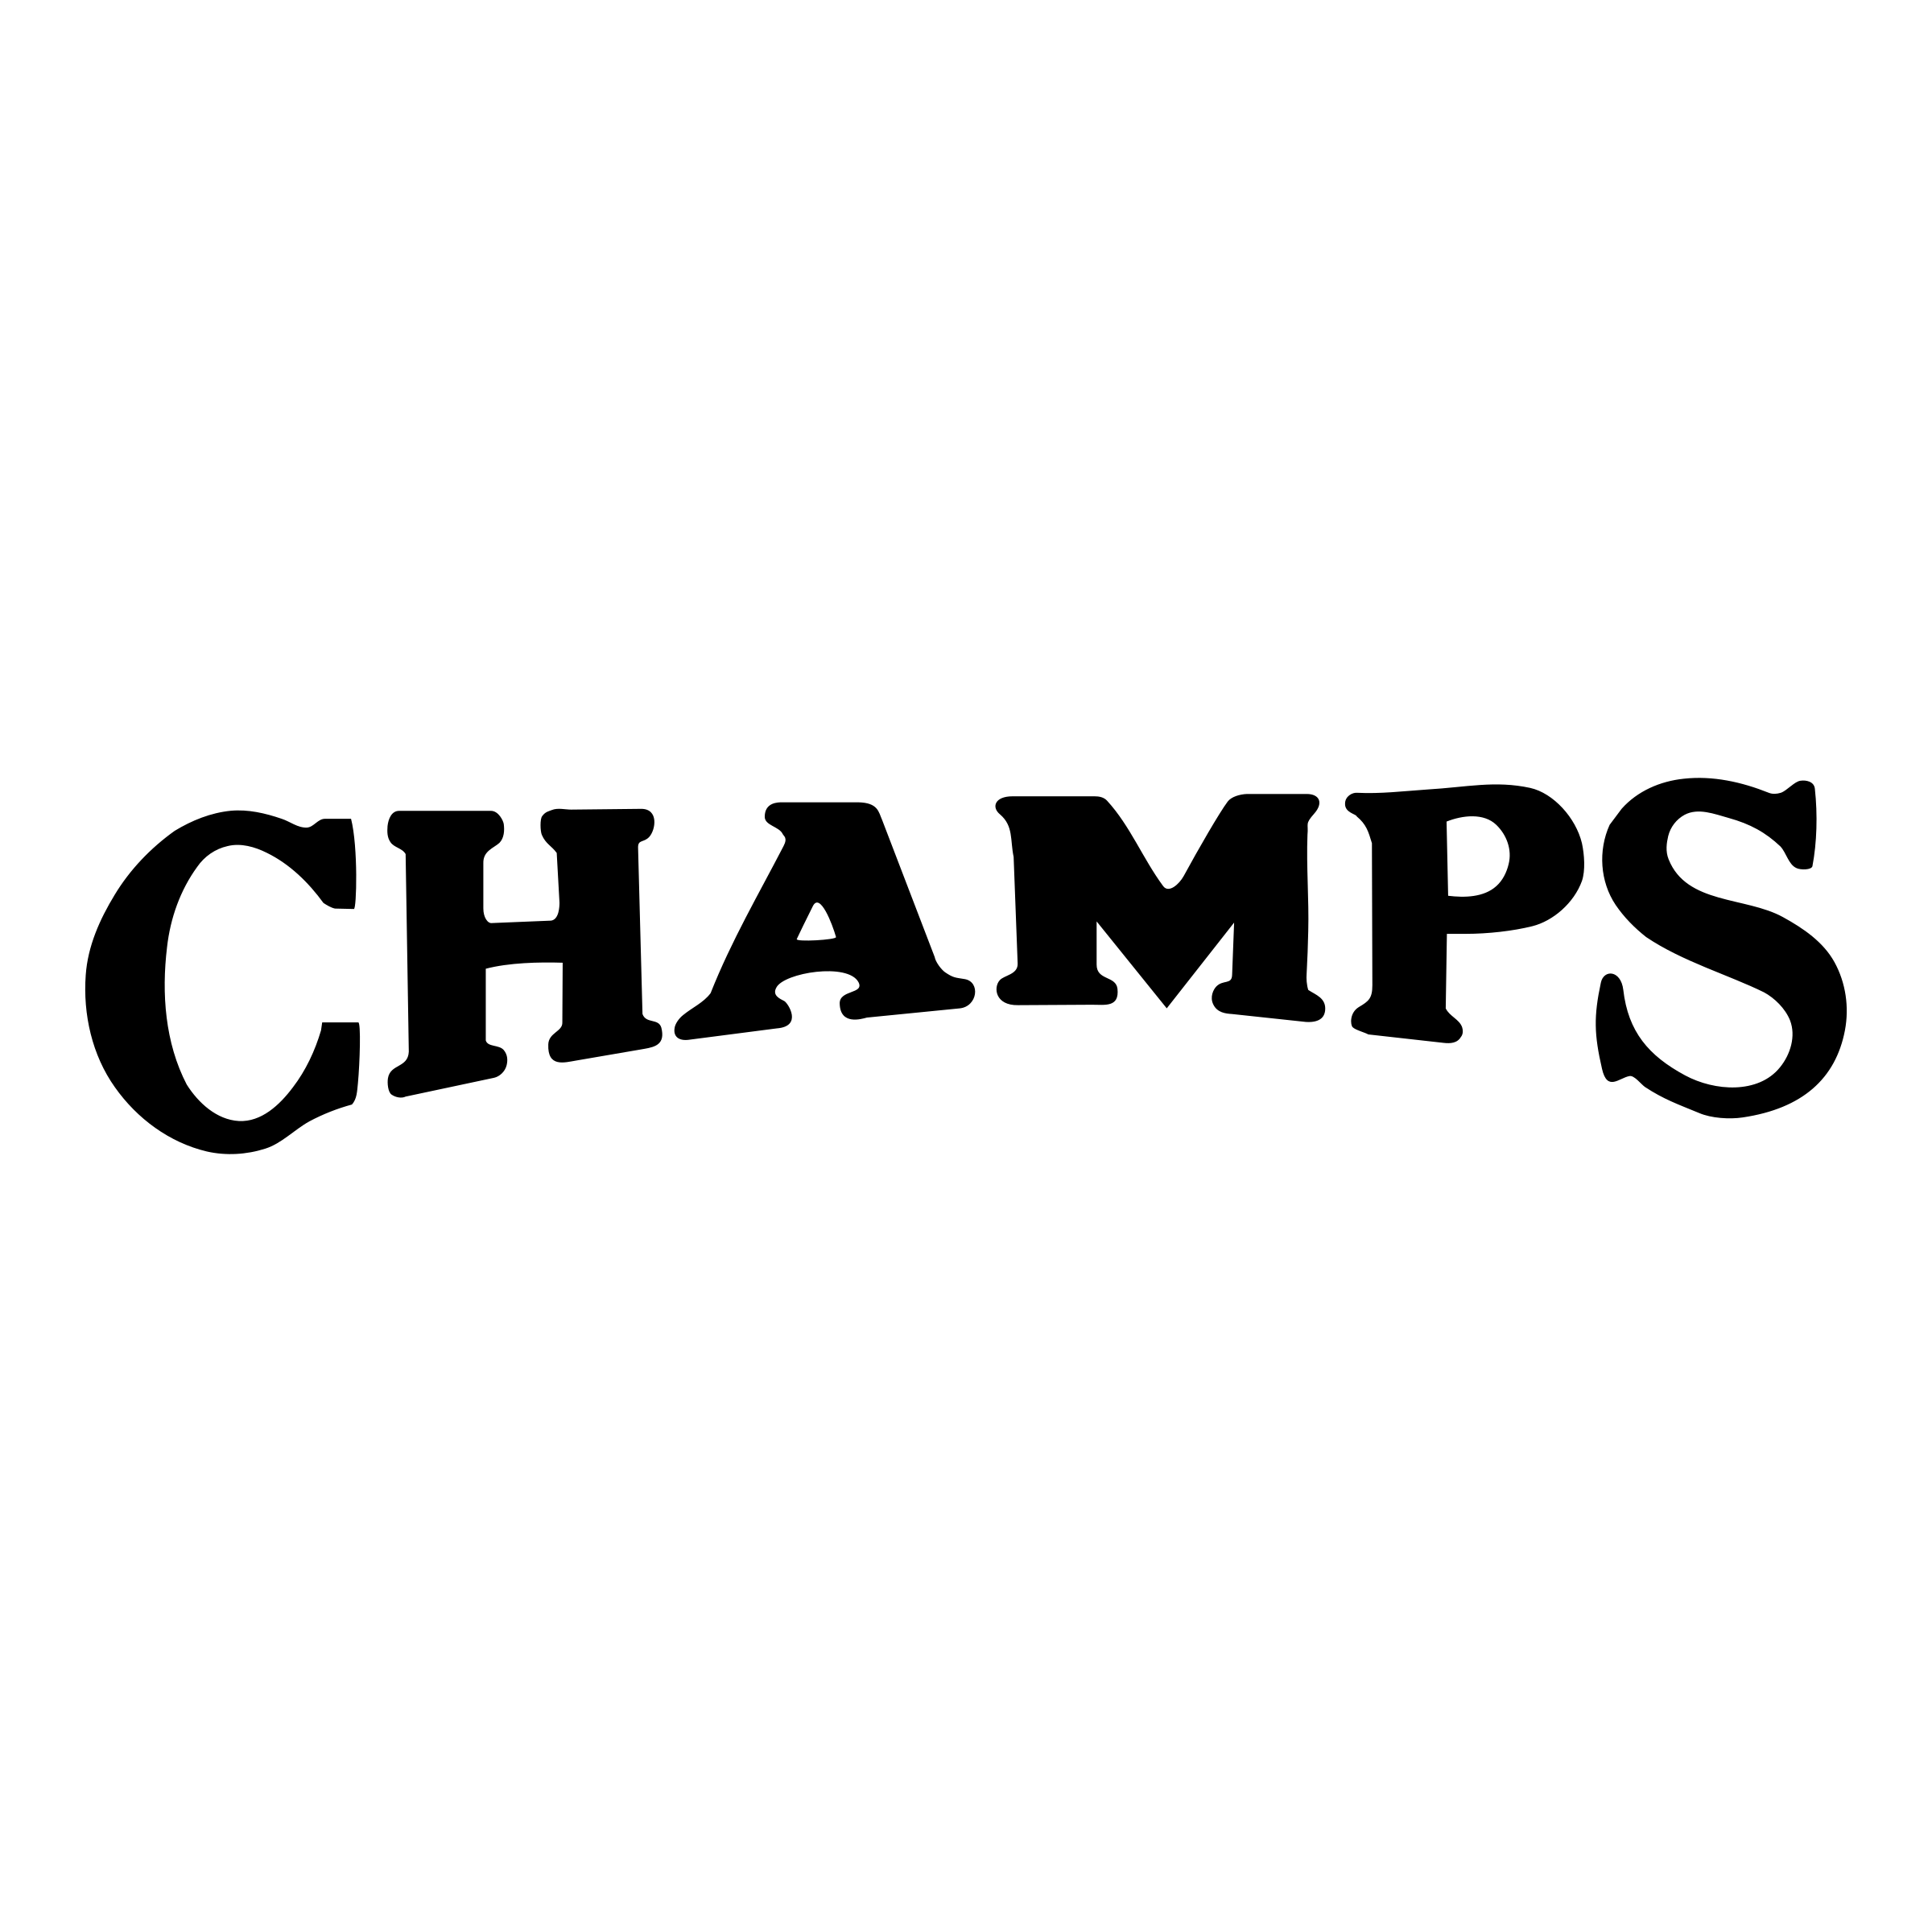 Champs Logo - Champs Logo PNG Transparent & SVG Vector